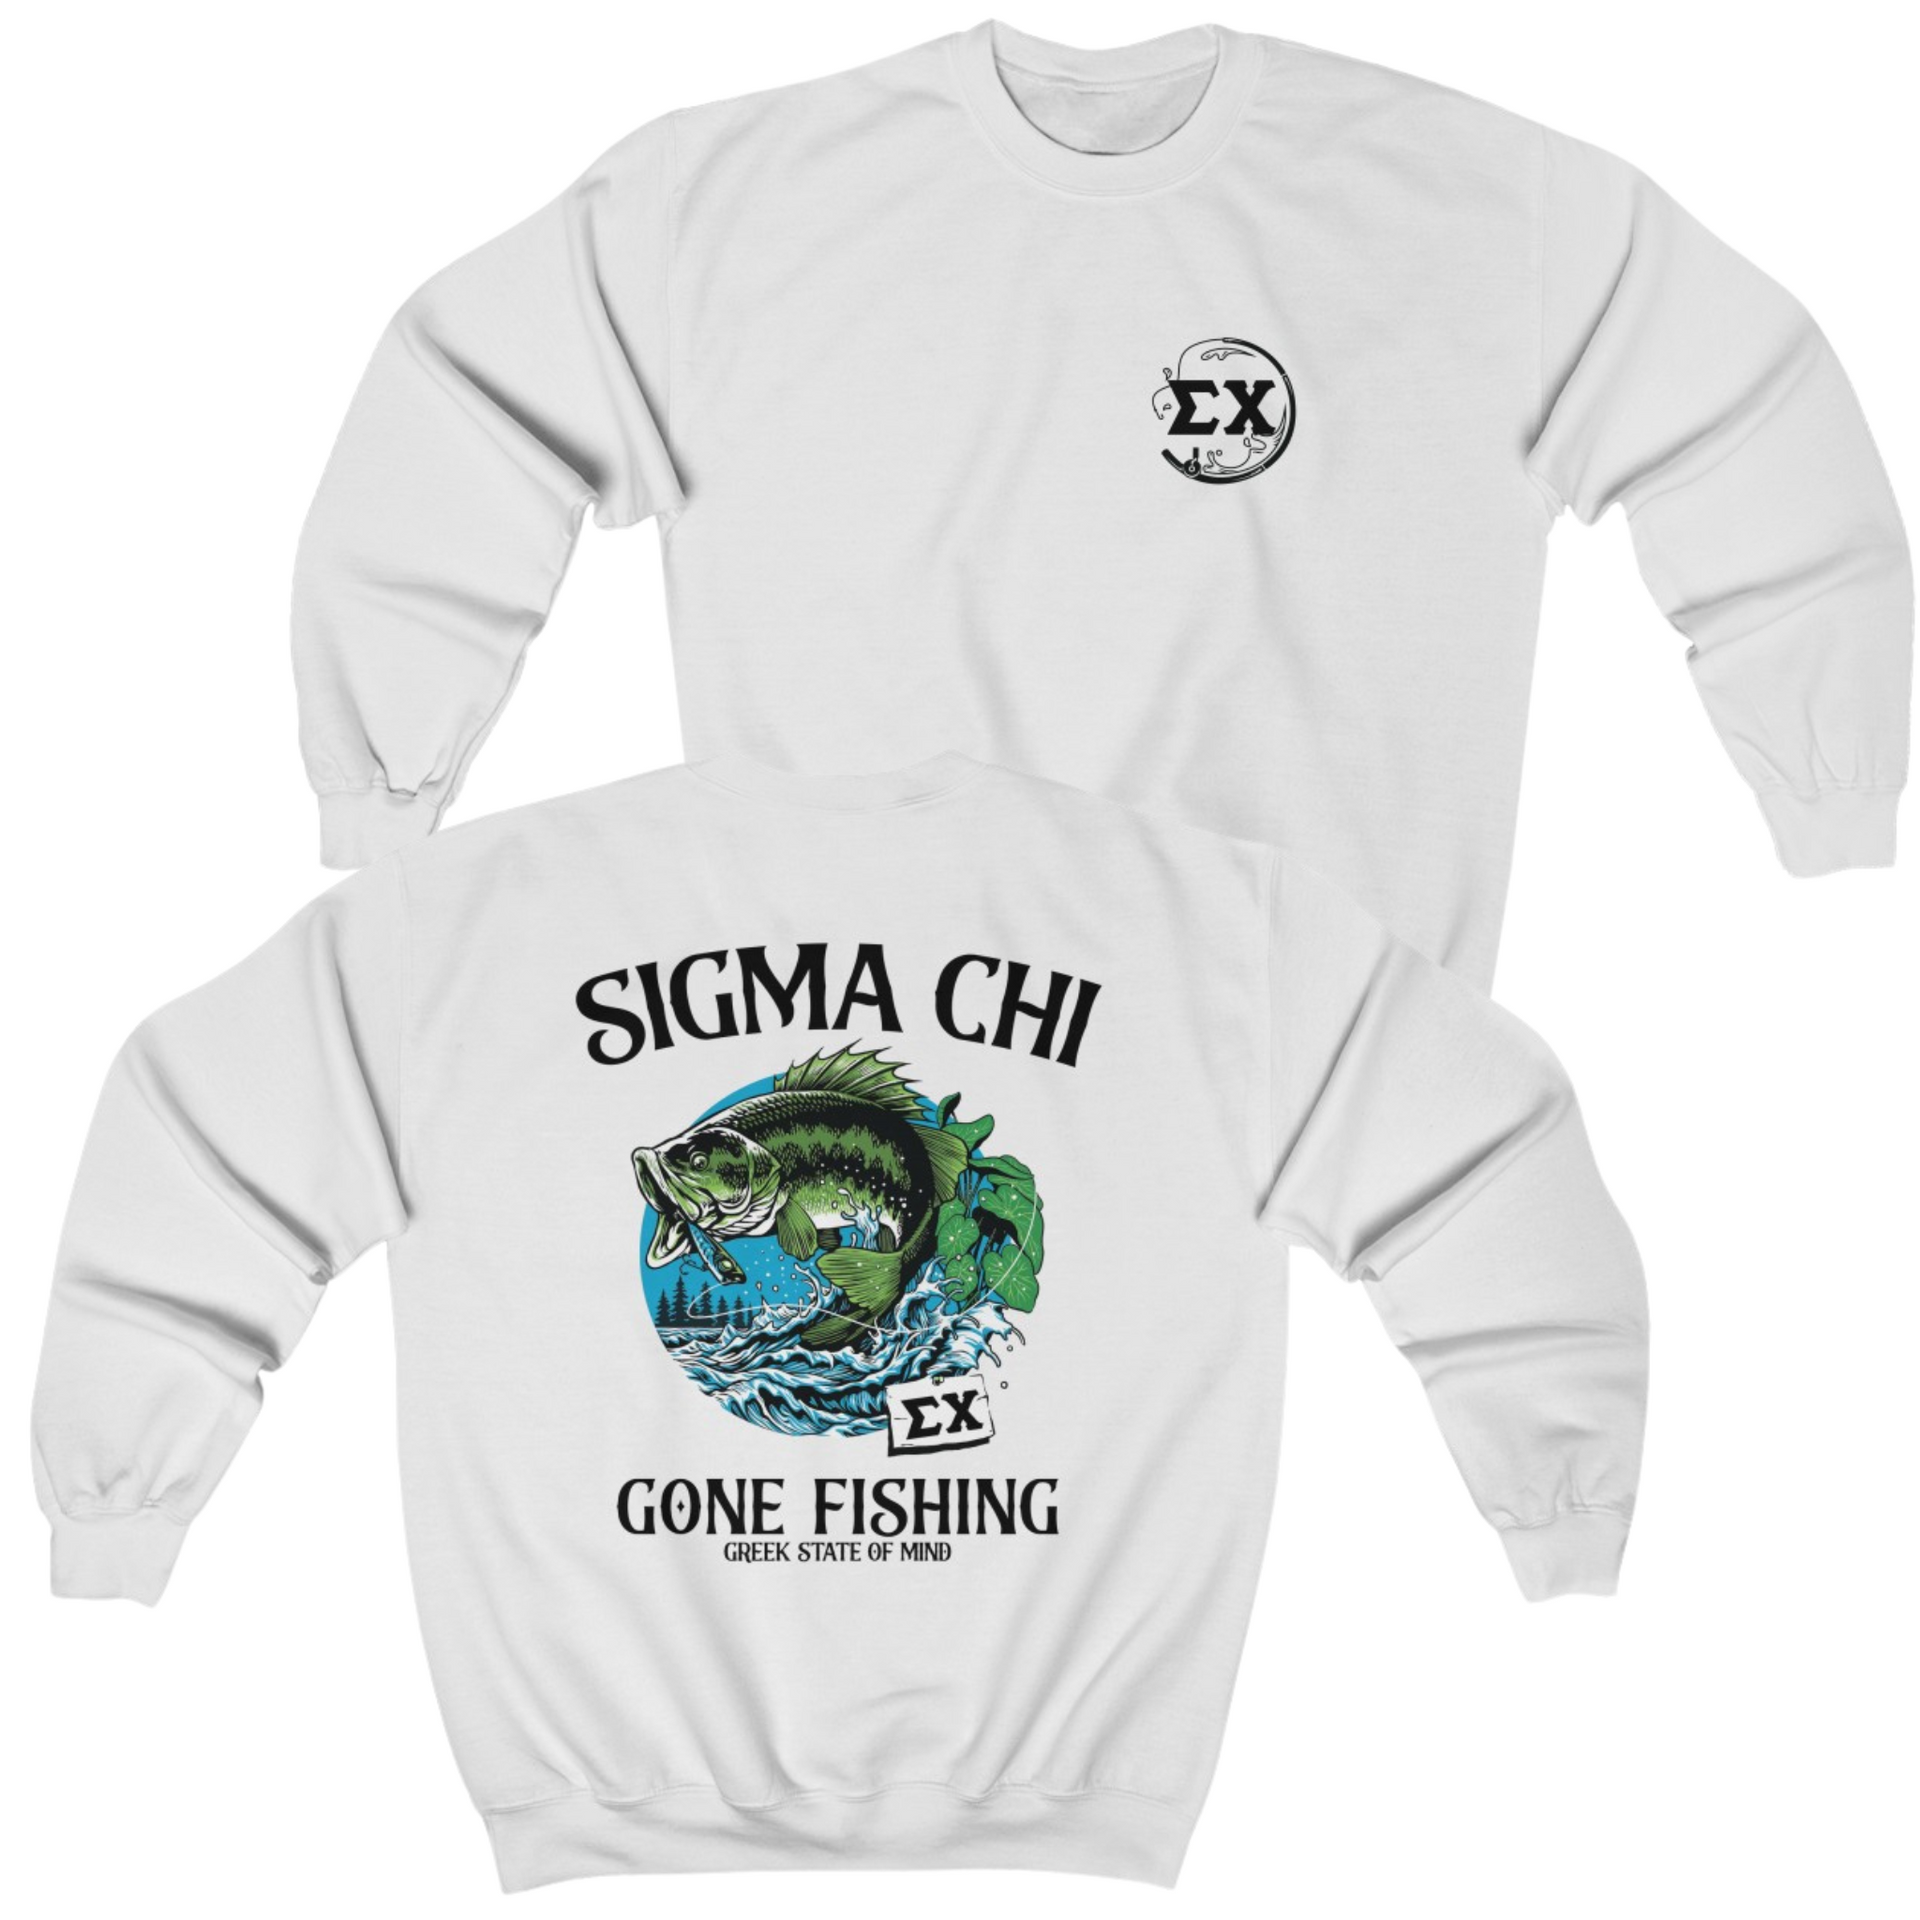 White Sigma Chi Graphic Crewneck Sweatshirt | Gone Fishing | Sigma Chi Fraternity Apparel